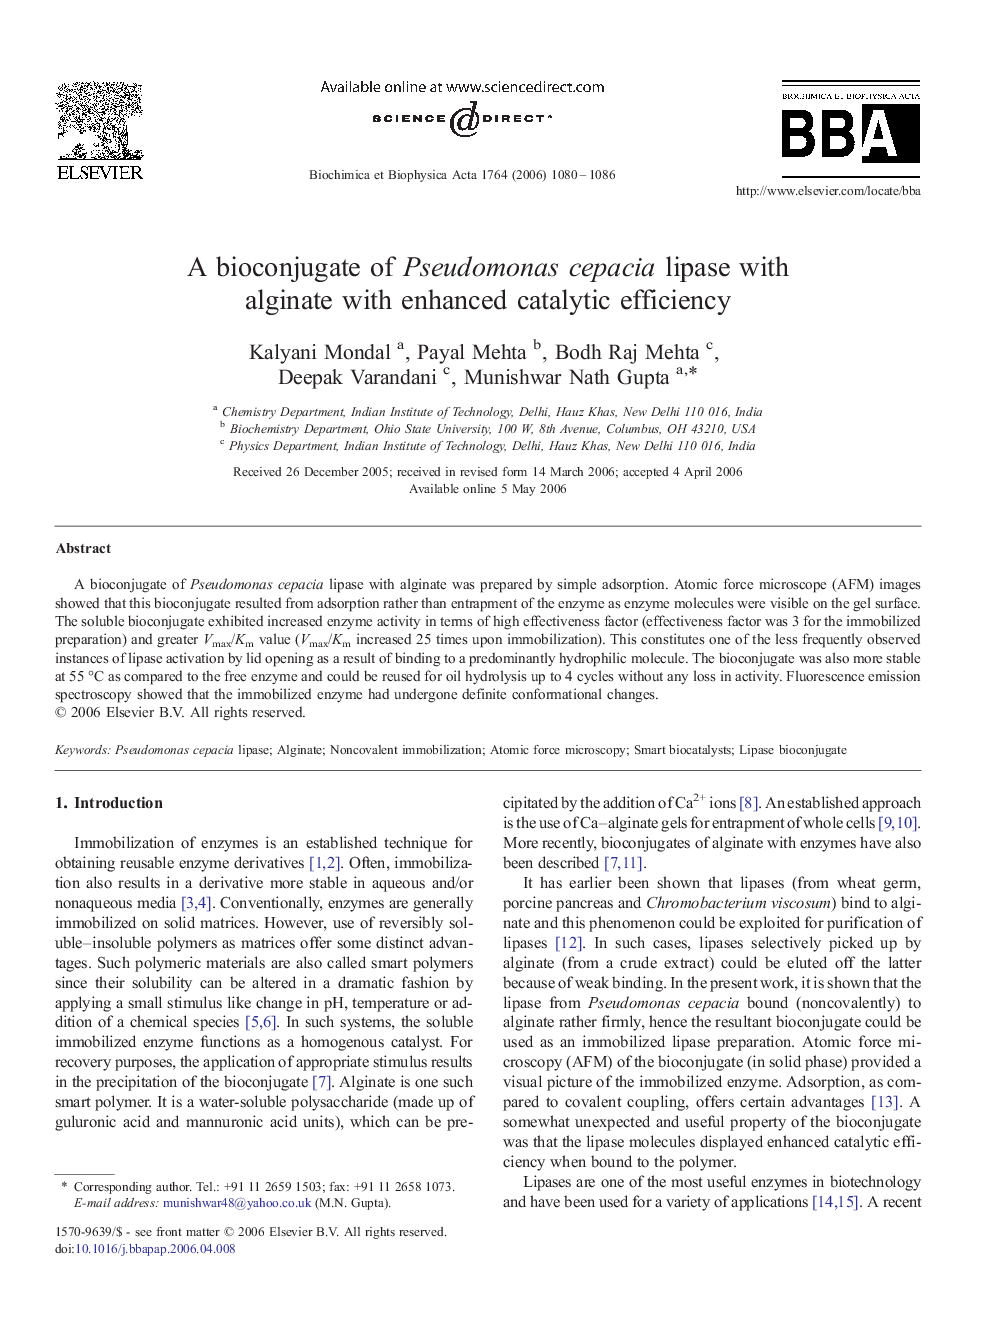 A bioconjugate of Pseudomonas cepacia lipase with alginate with enhanced catalytic efficiency